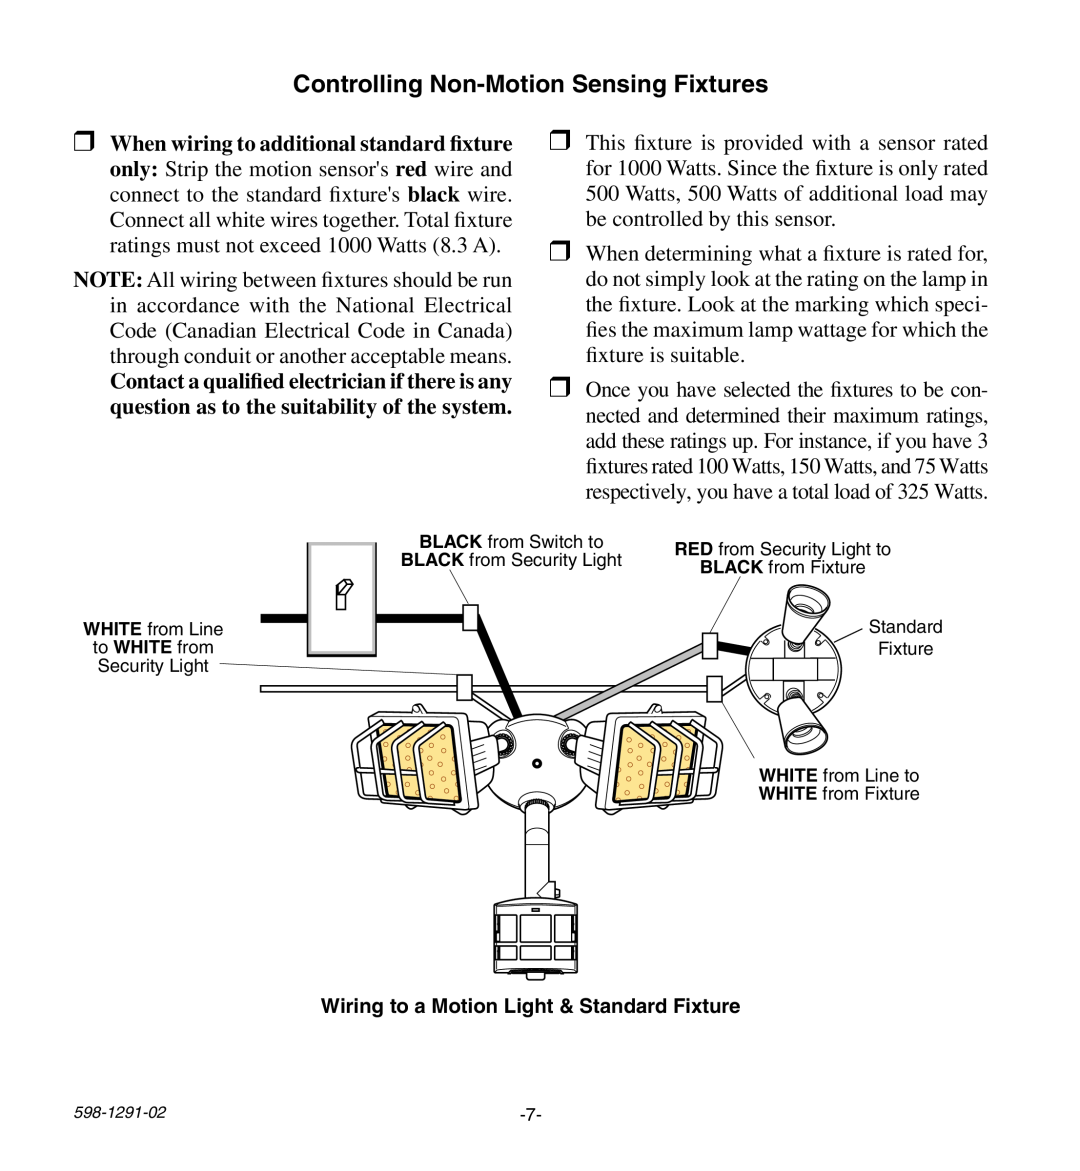 Heath Zenith UT-9260-BZ, UT-9260-WH Controlling Non-MotionSensing Fixtures, Wiring to a Motion Light & Standard Fixture 